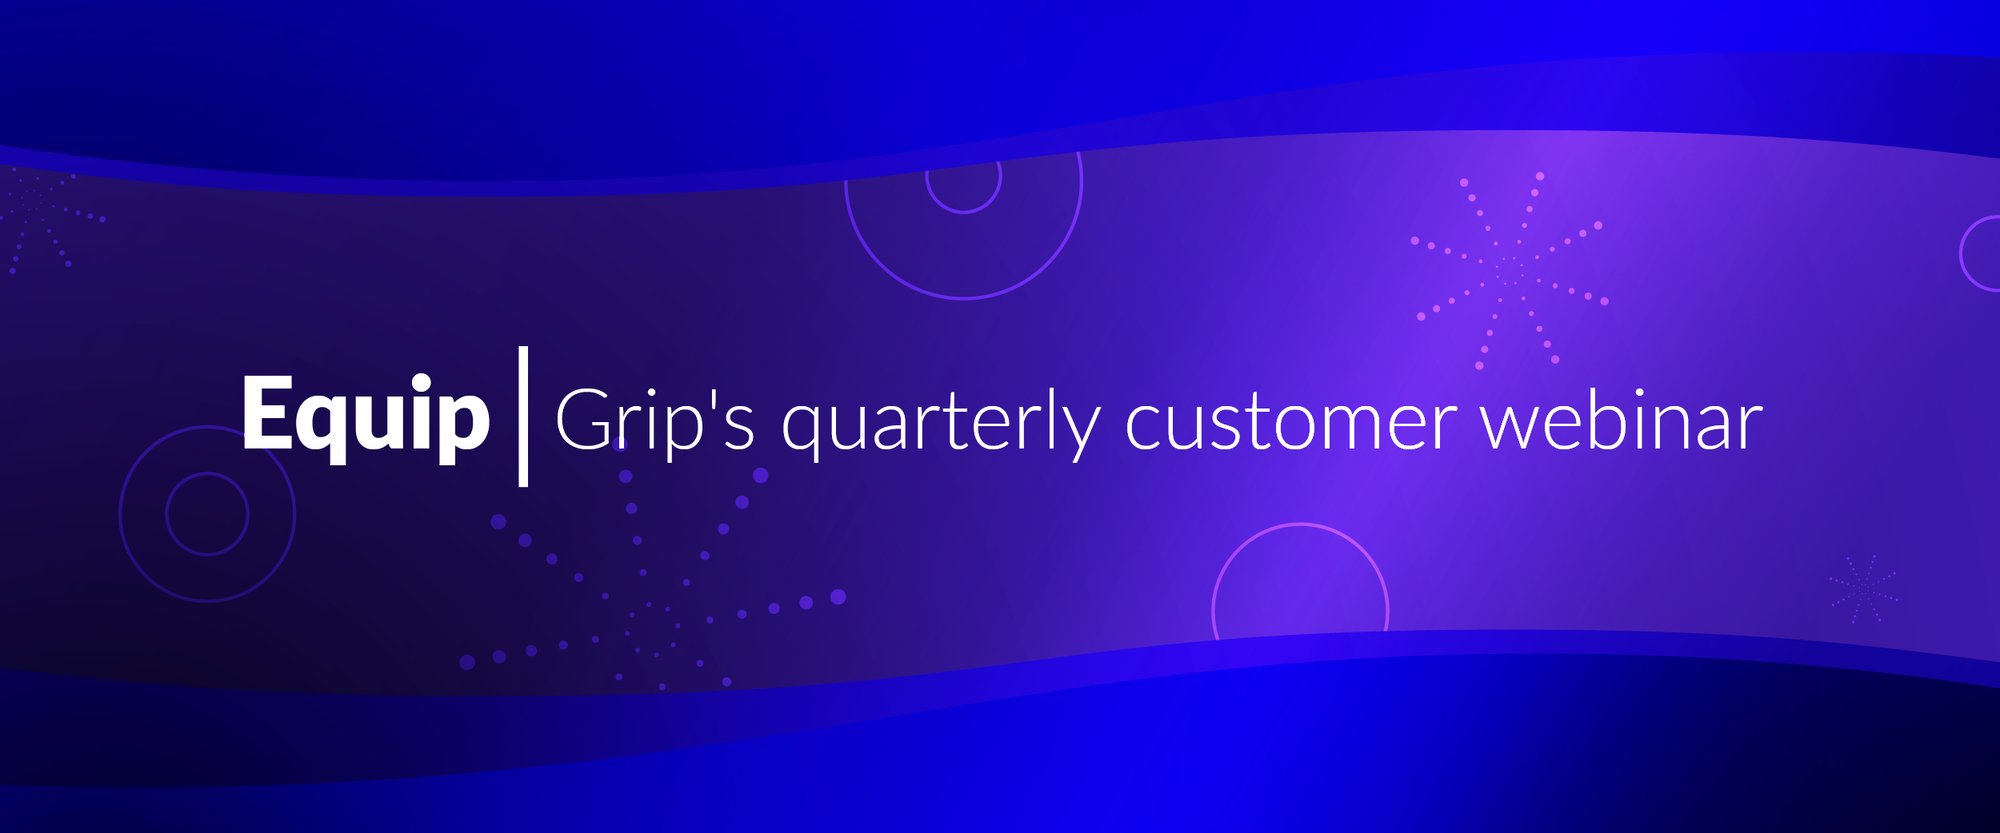 Equip-Grips-quarterly-customer-webinar-v3